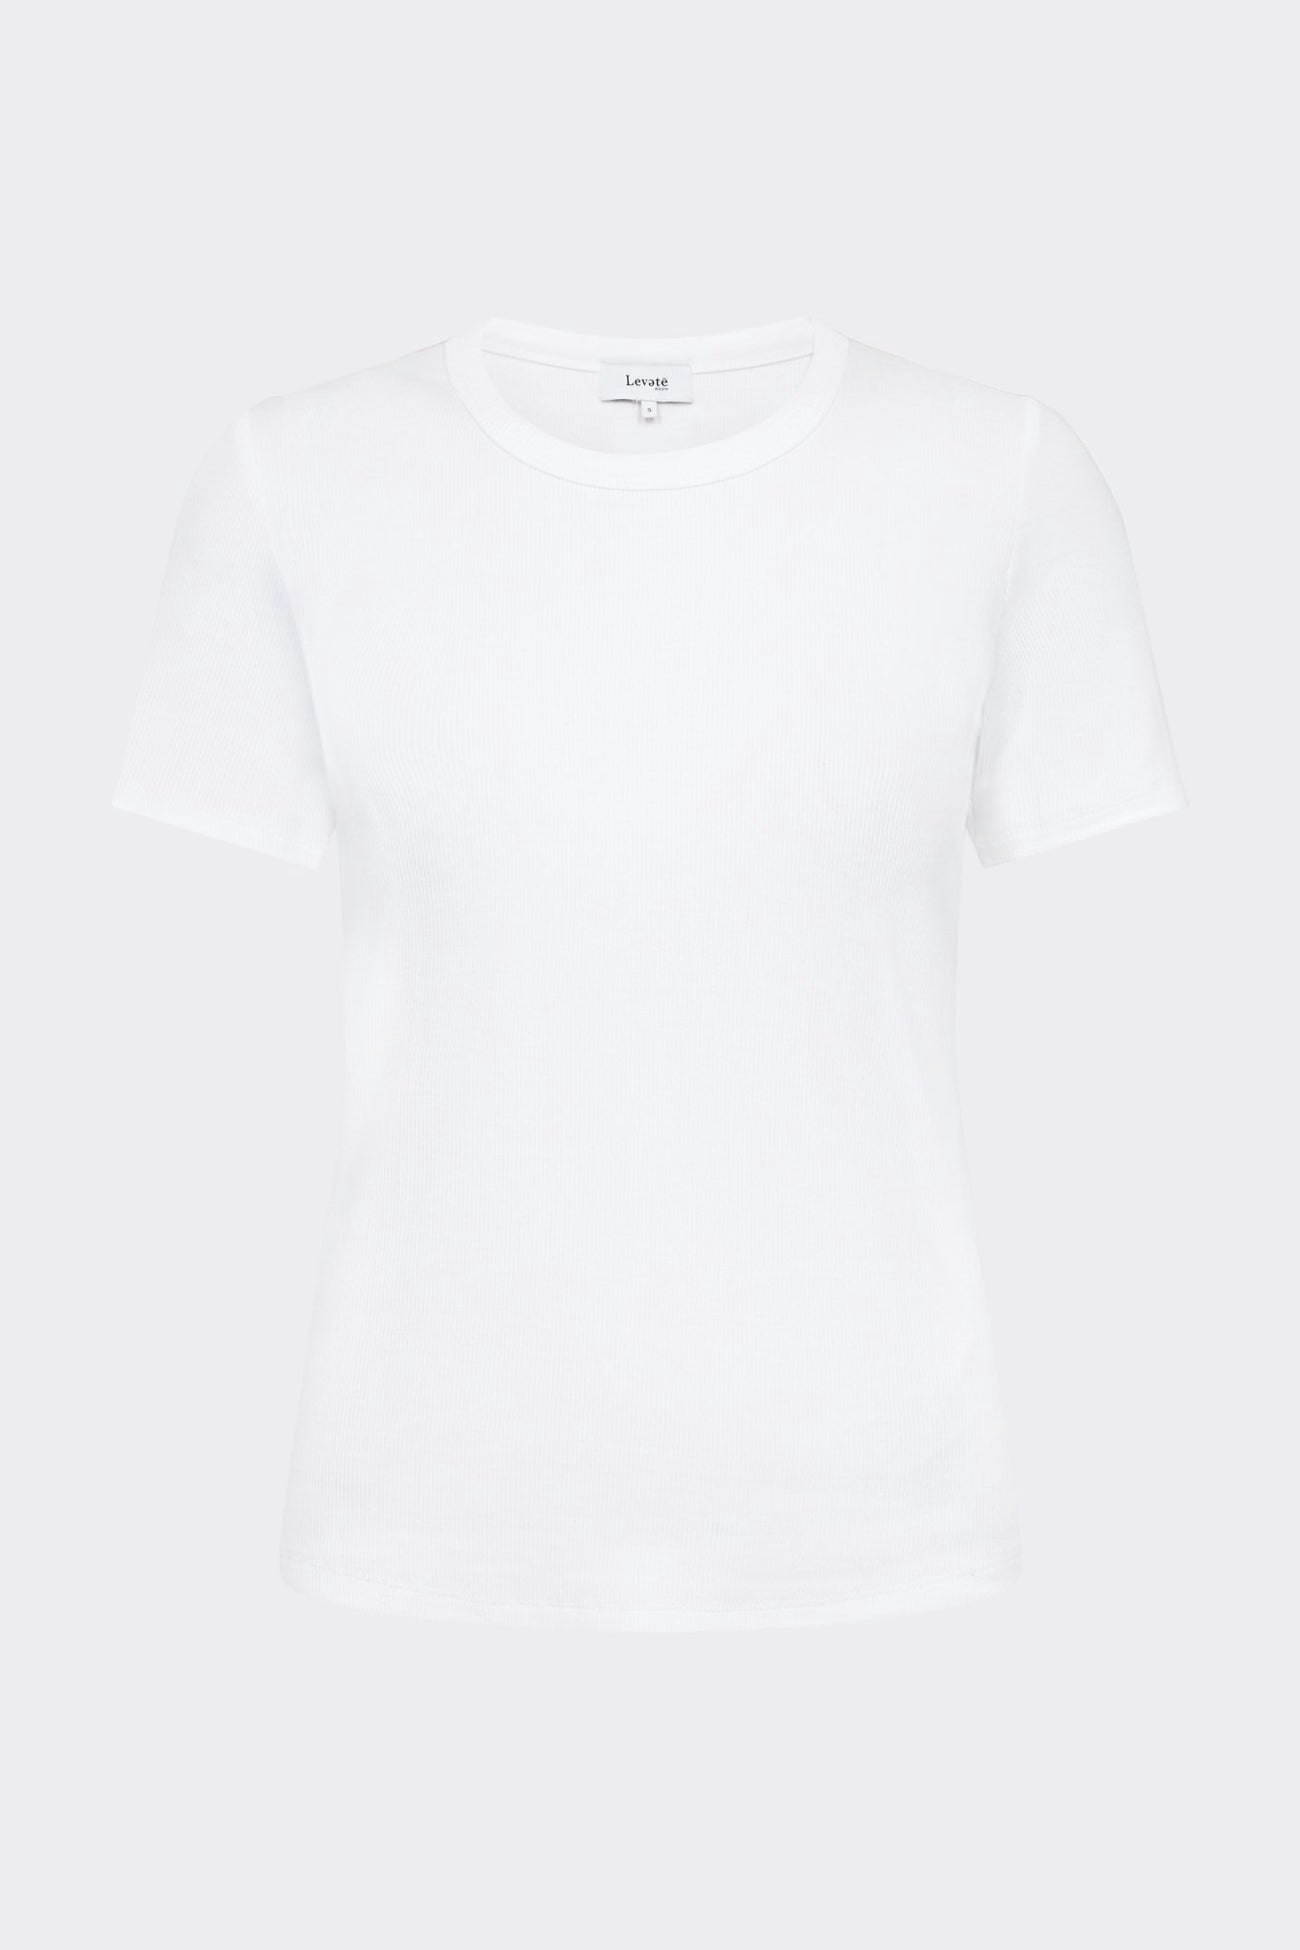 LR-Numbia 5 T-Shirt White Levete Room